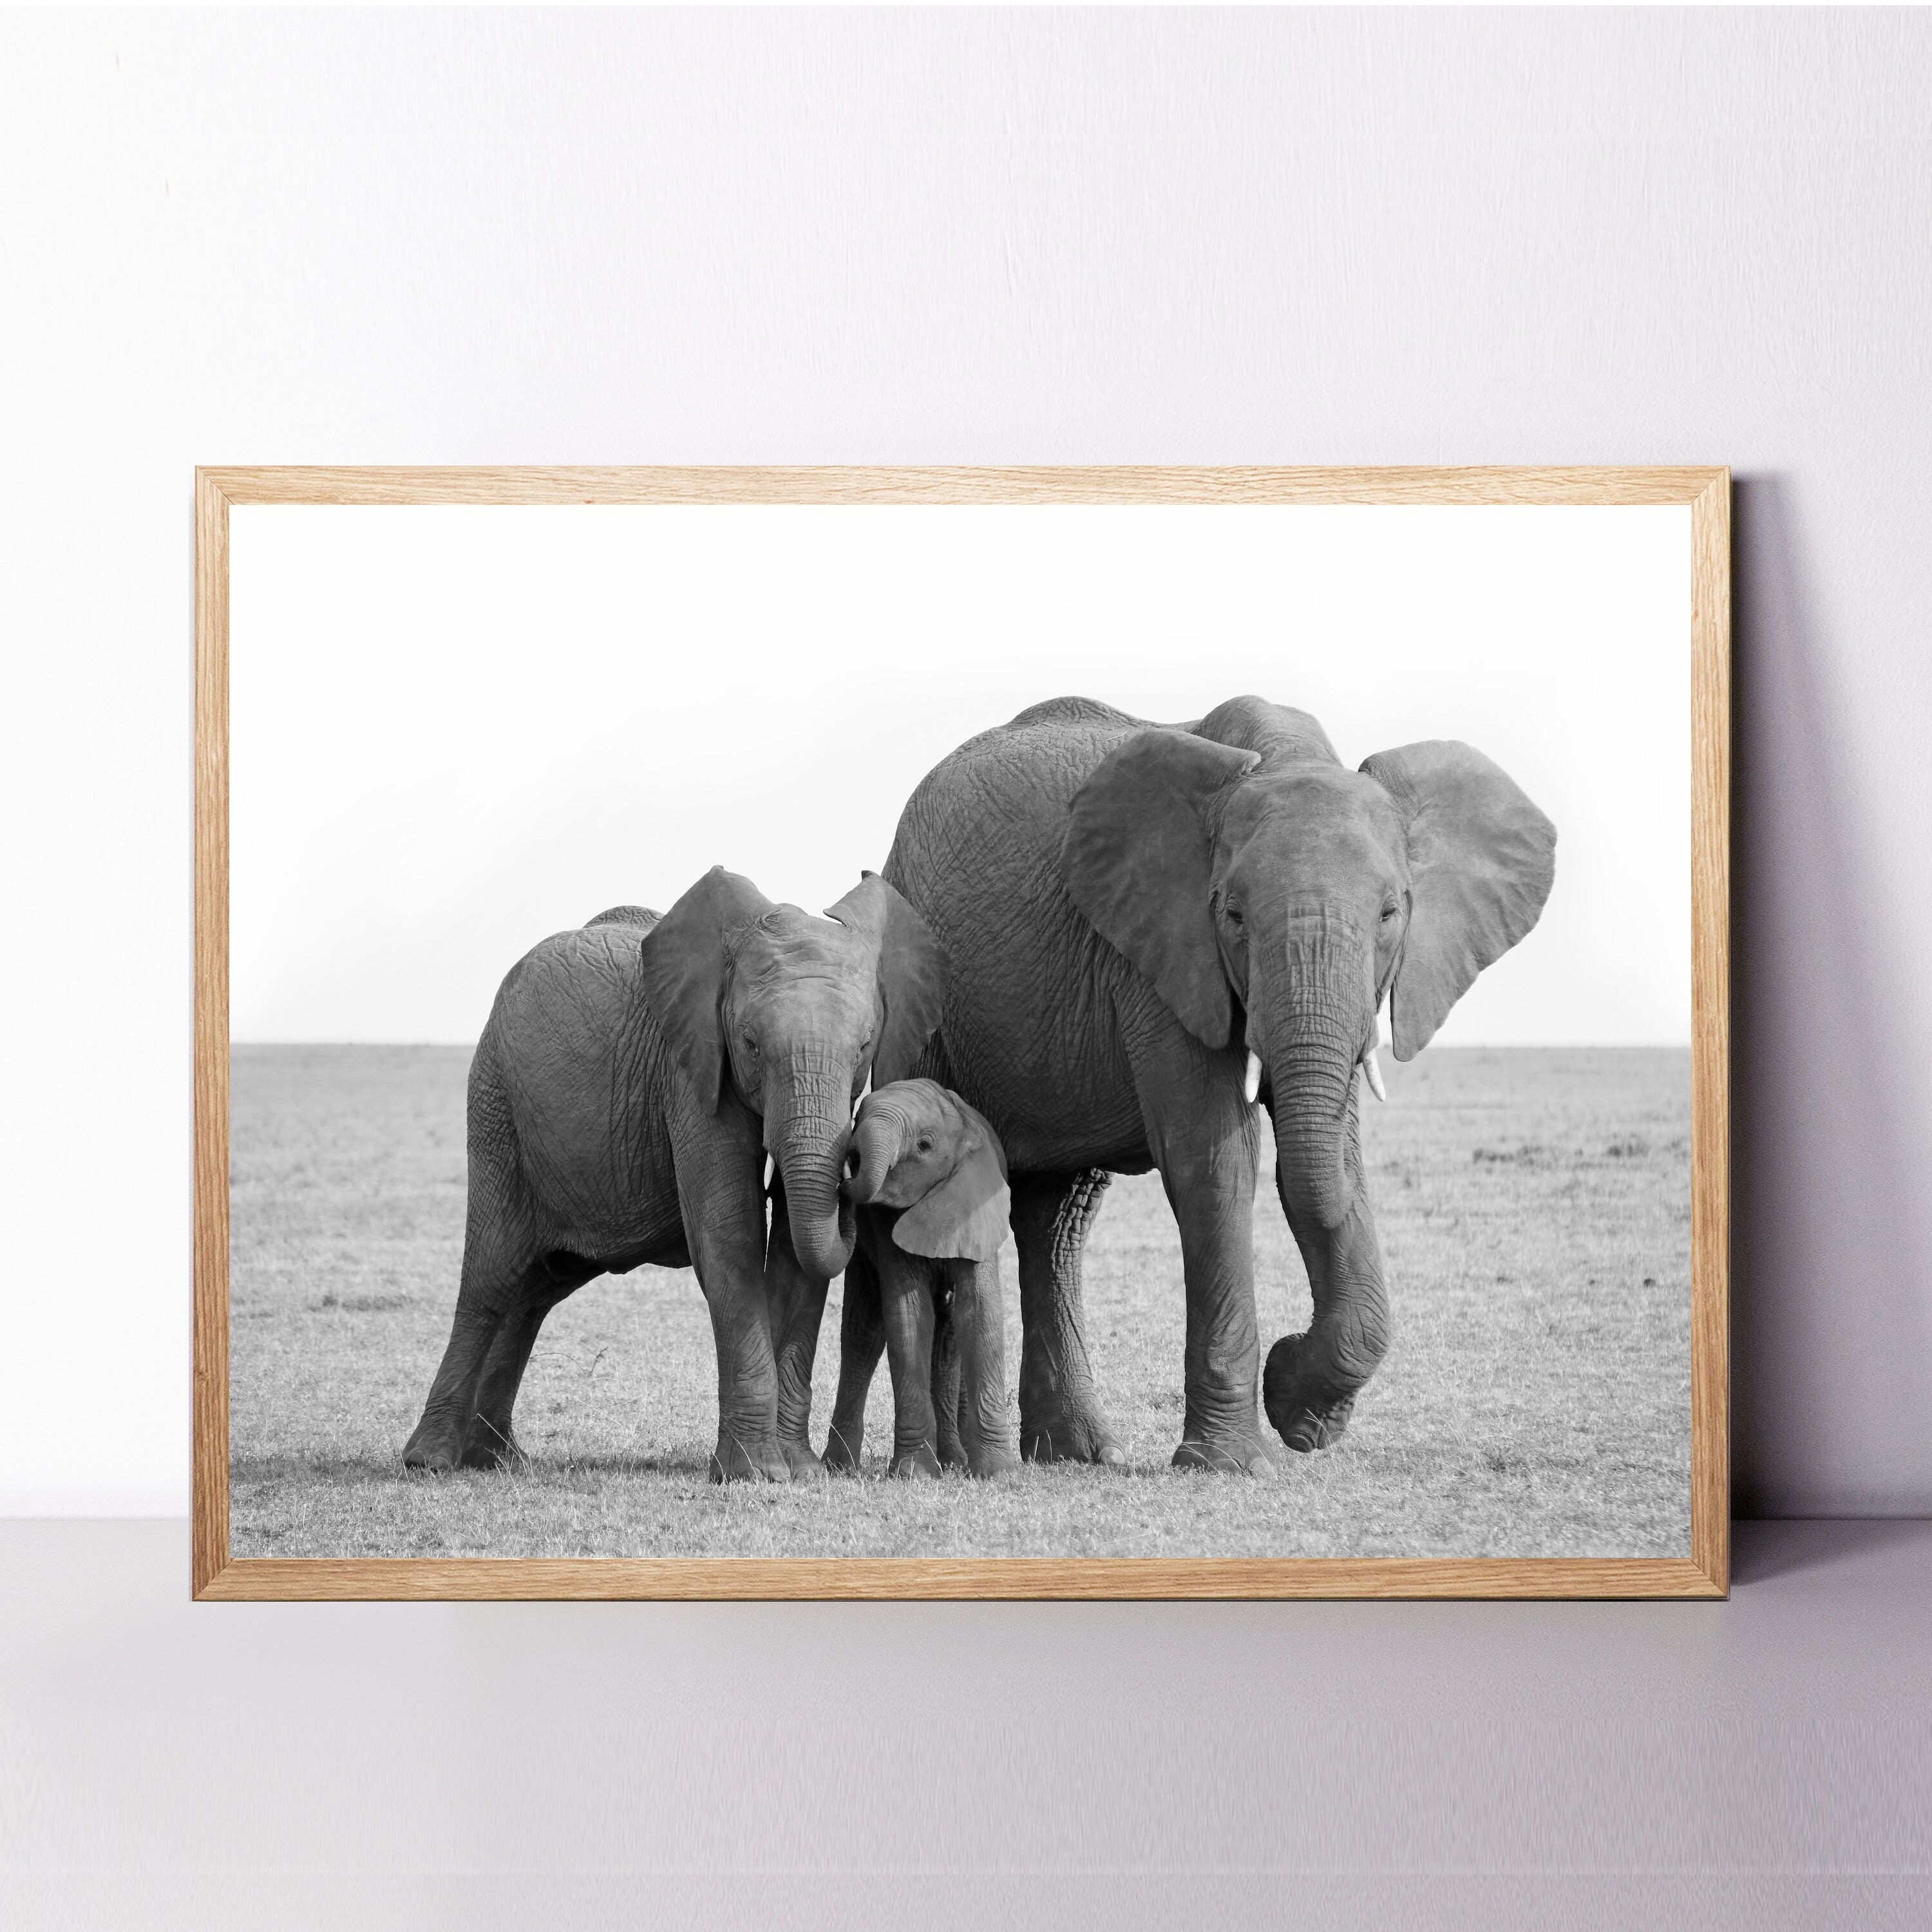 My Patronus Is An Elephant Gifts Baby Elephant' Sticker